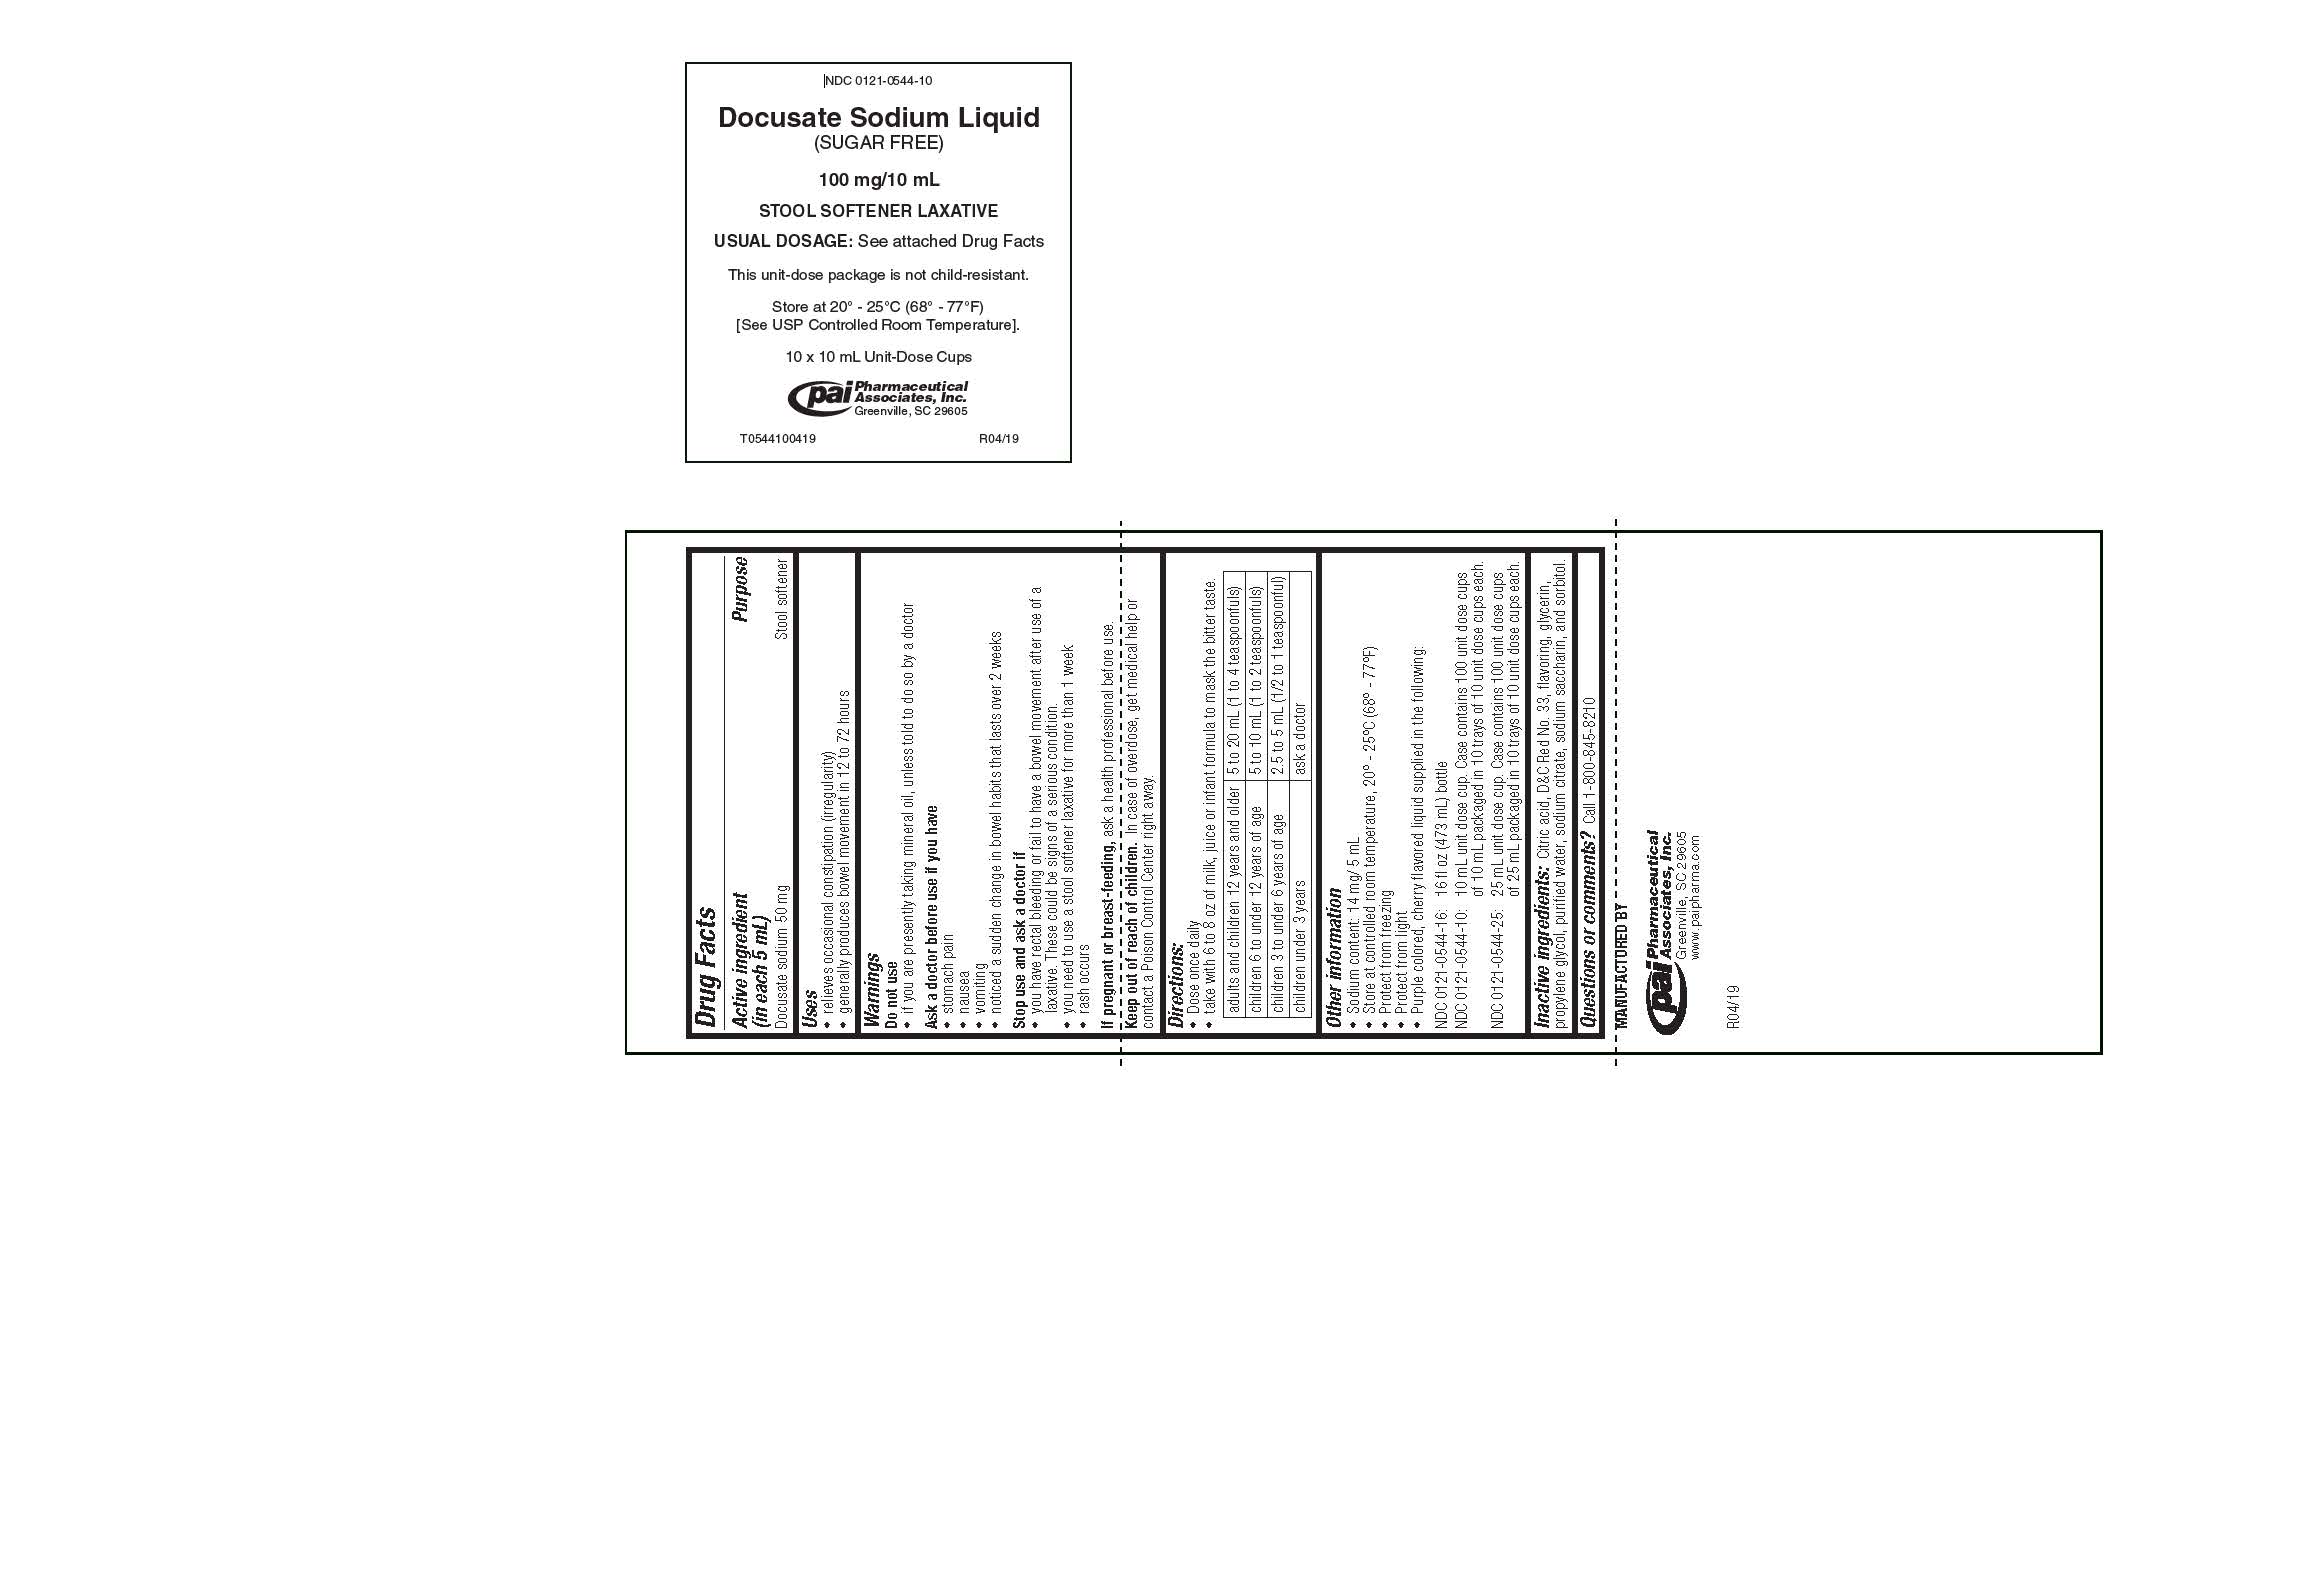 PRINCIPAL DISPLAY PANEL - 10 mL Cup Tray Label